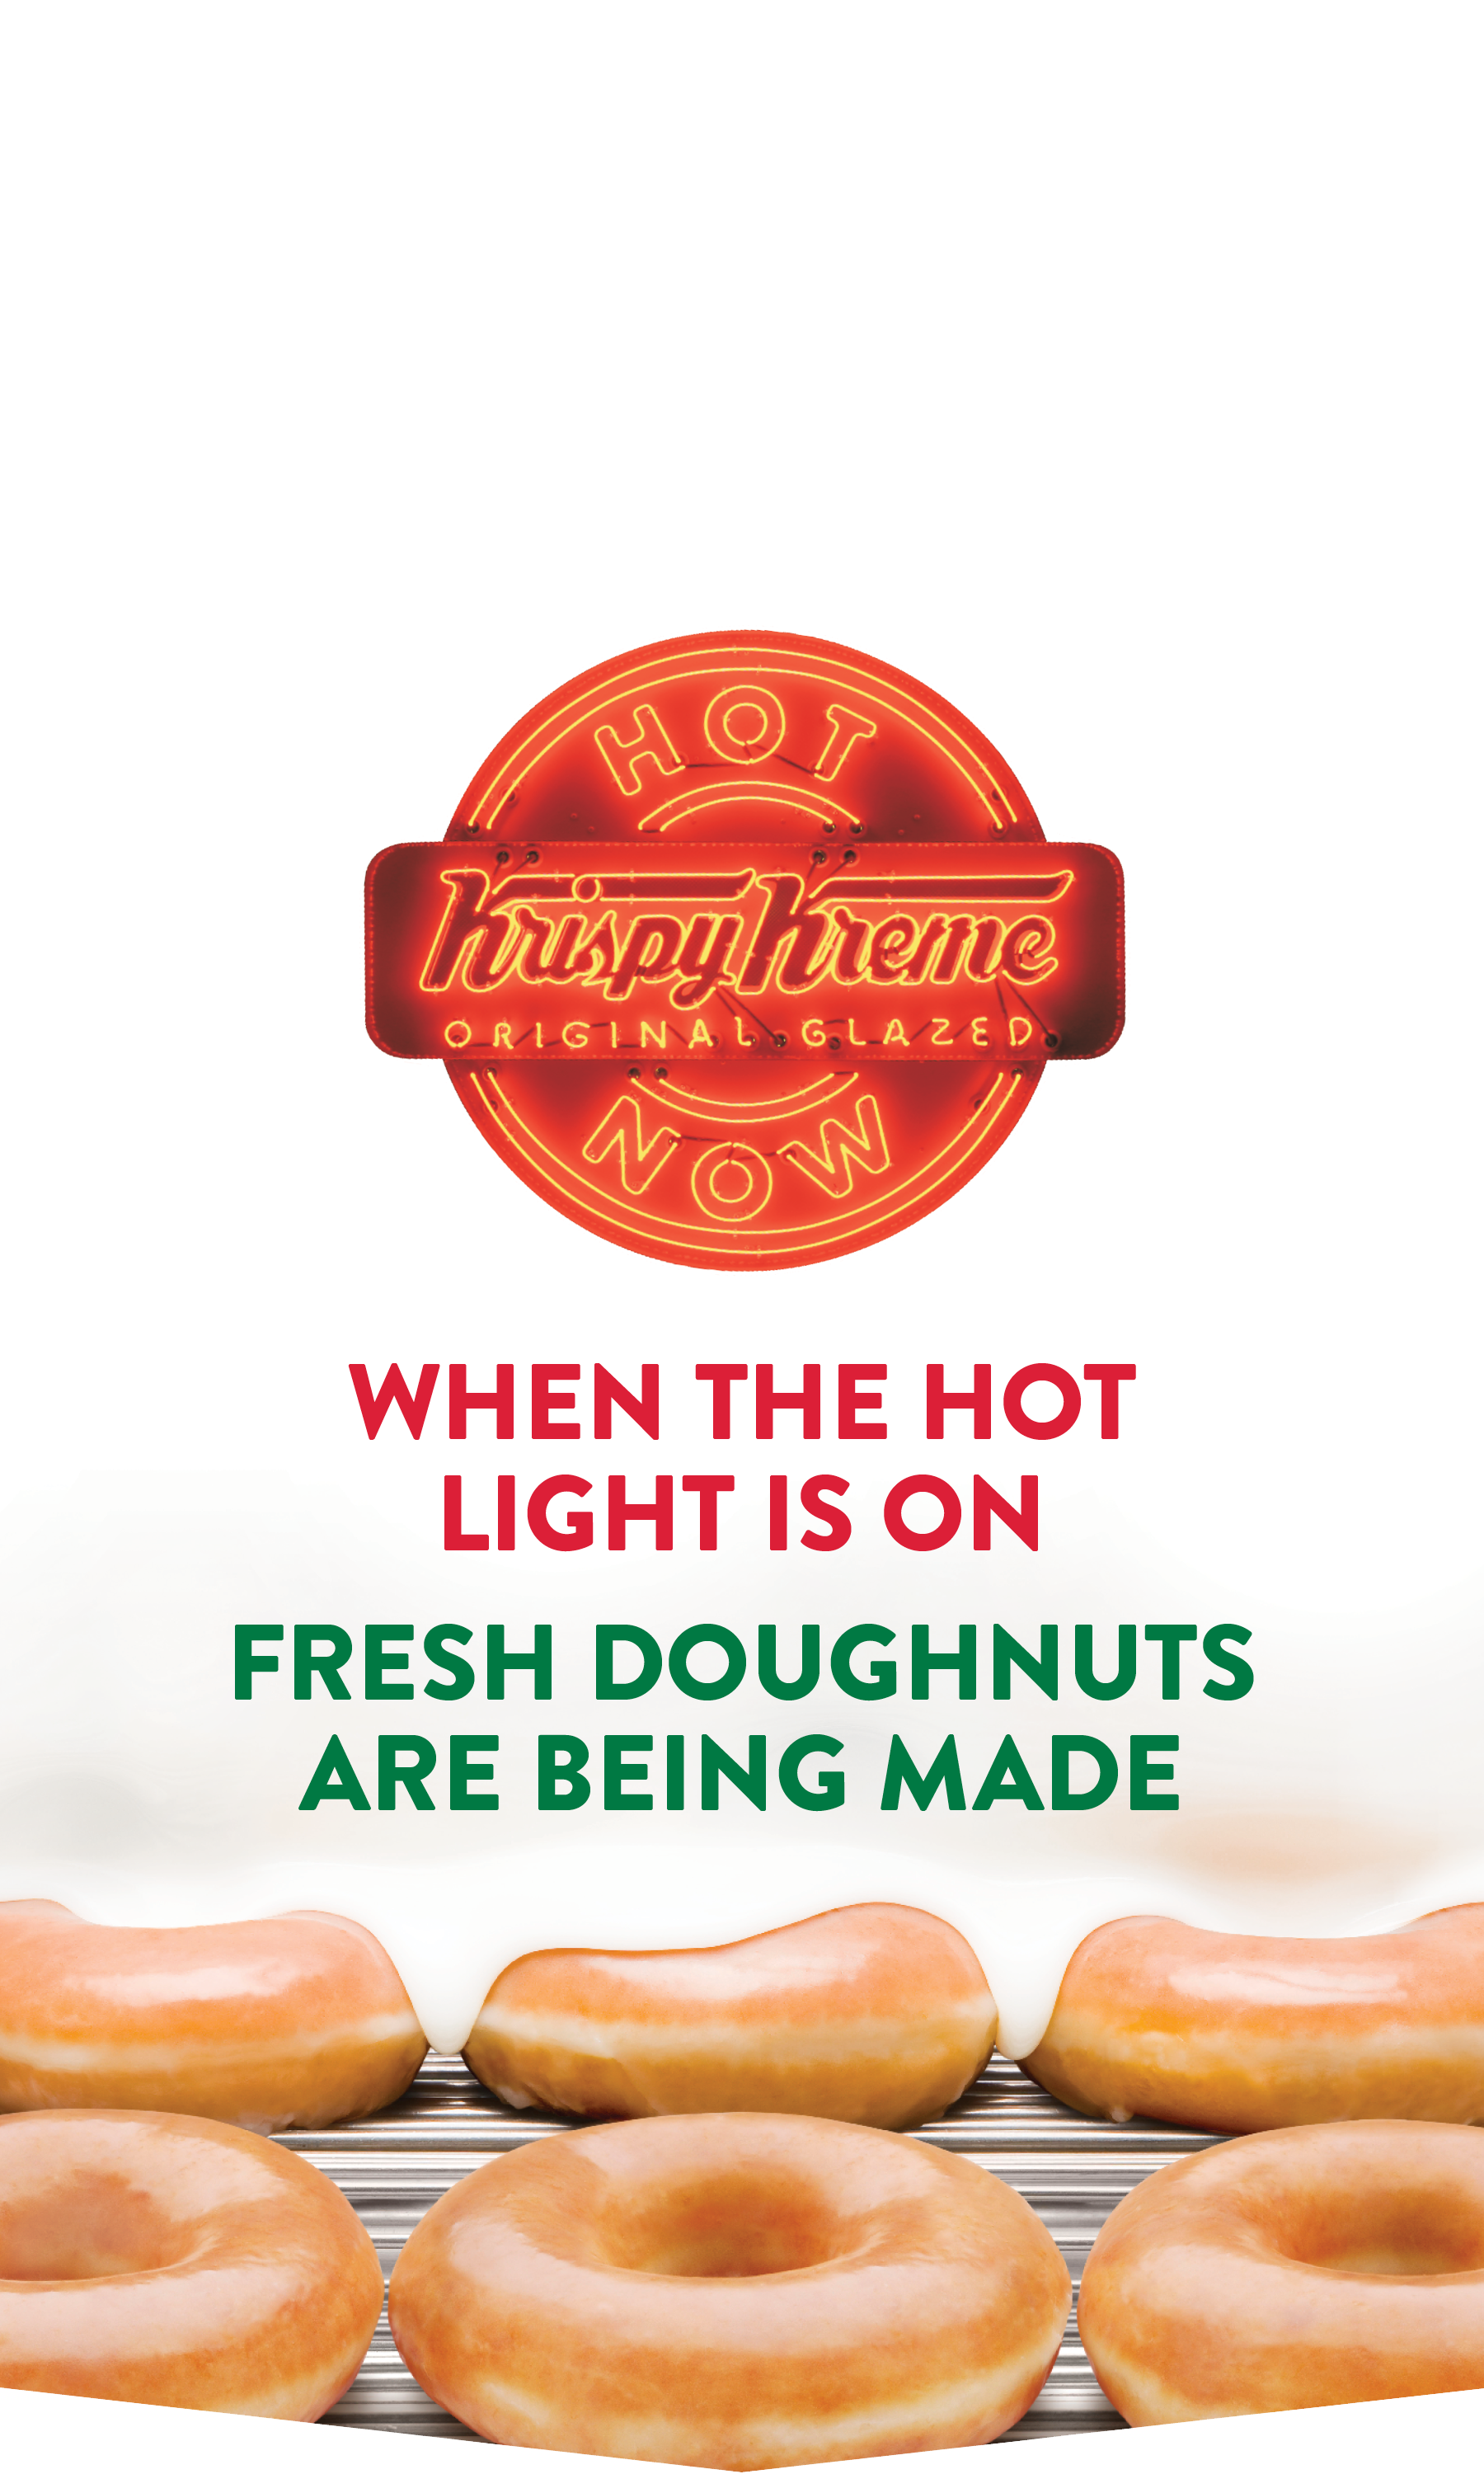 Krispy Kreme Website Updated - Mobile Web Banner 1800x300px FINAL Hot Light